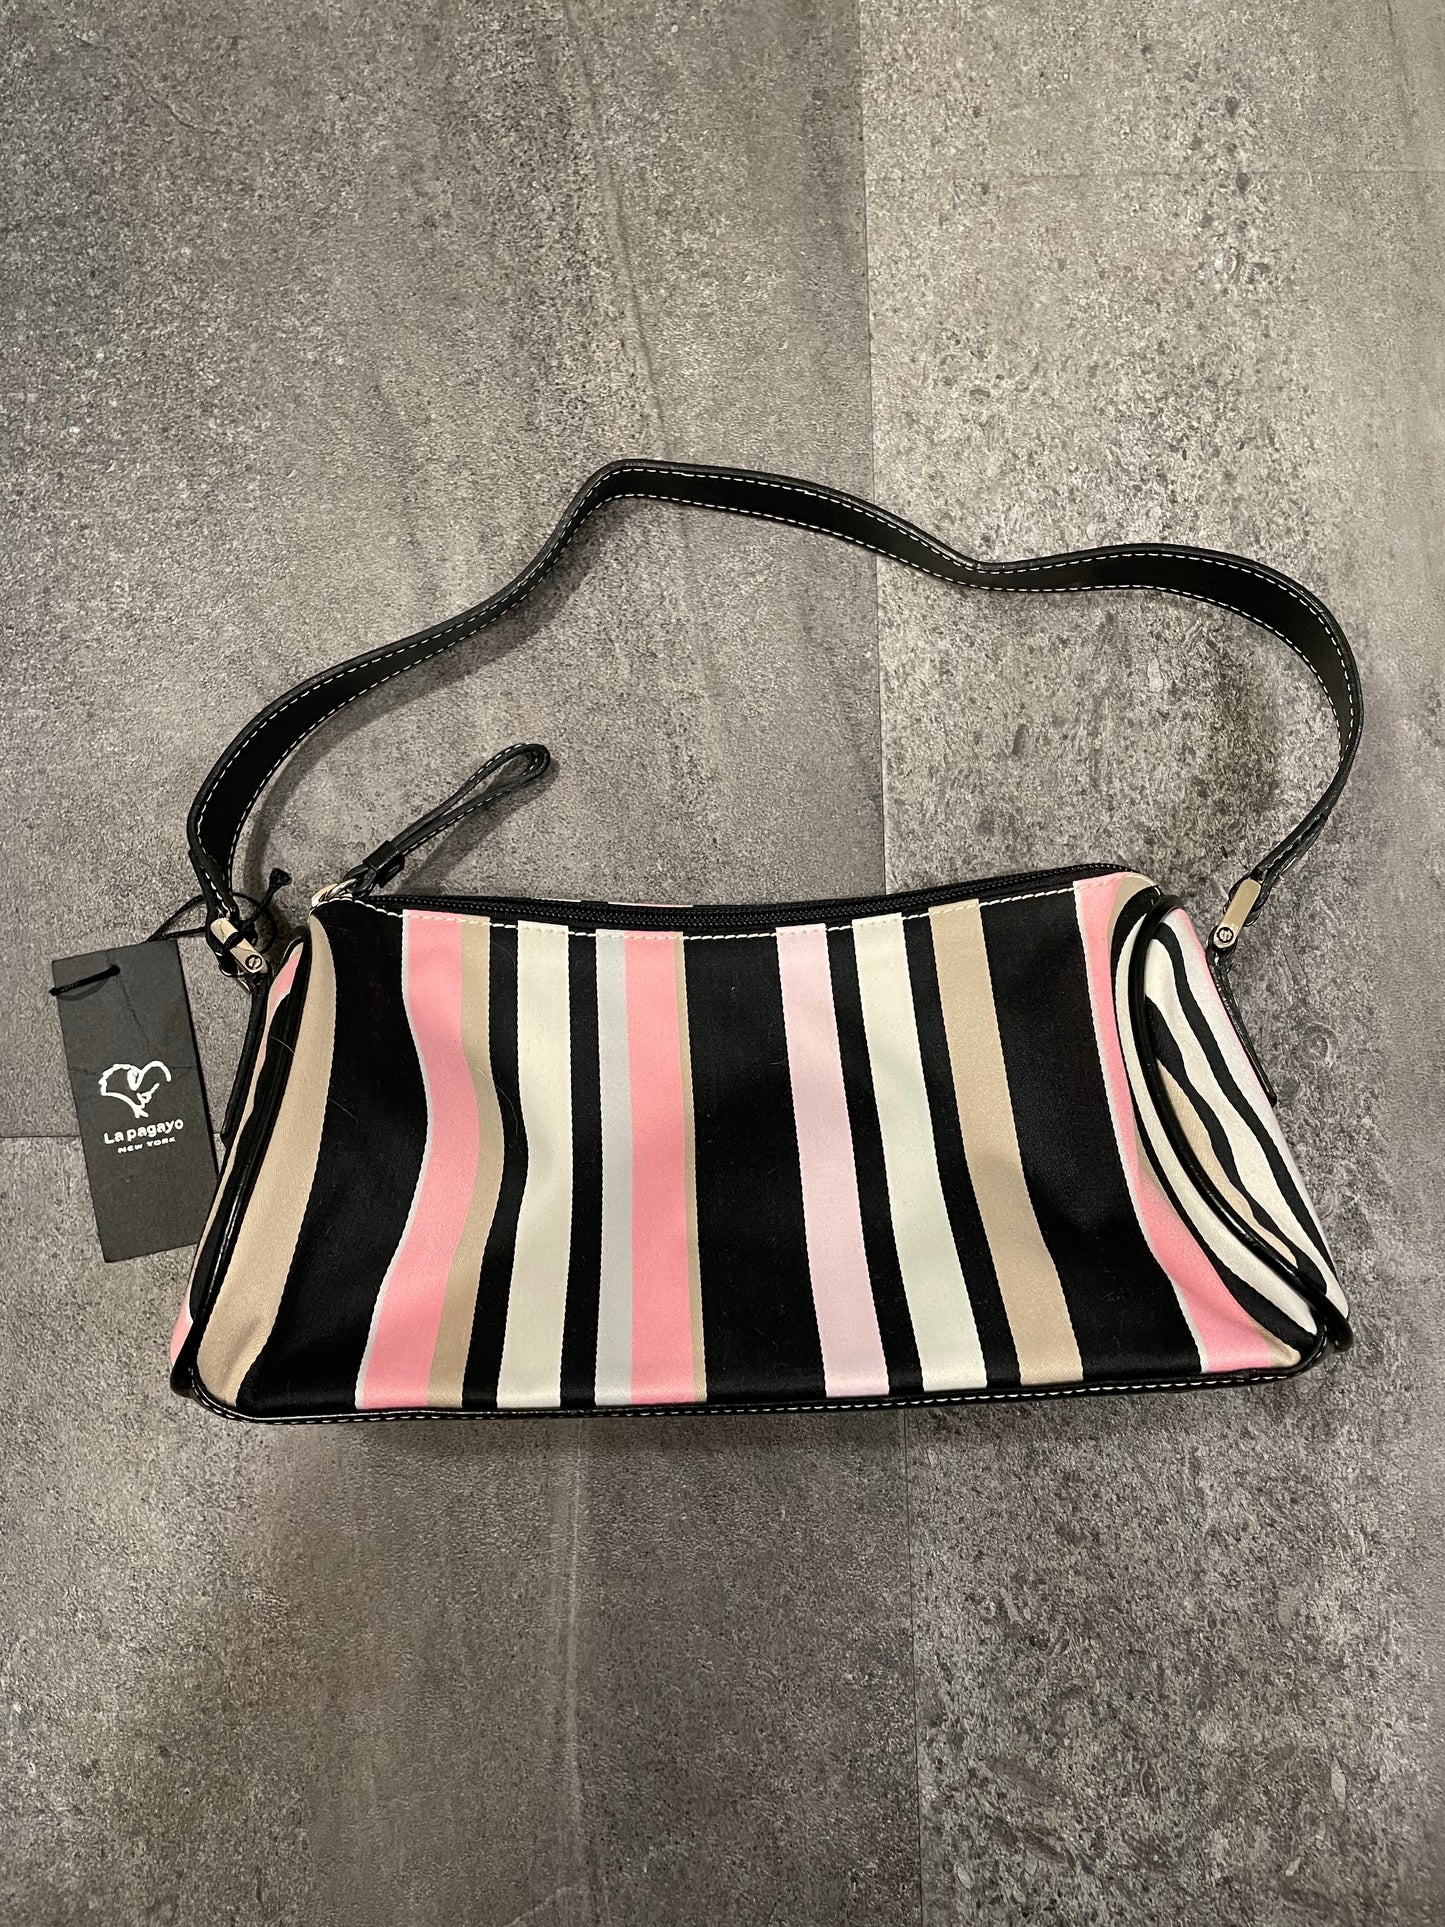 La Pagayo Striped Handbag